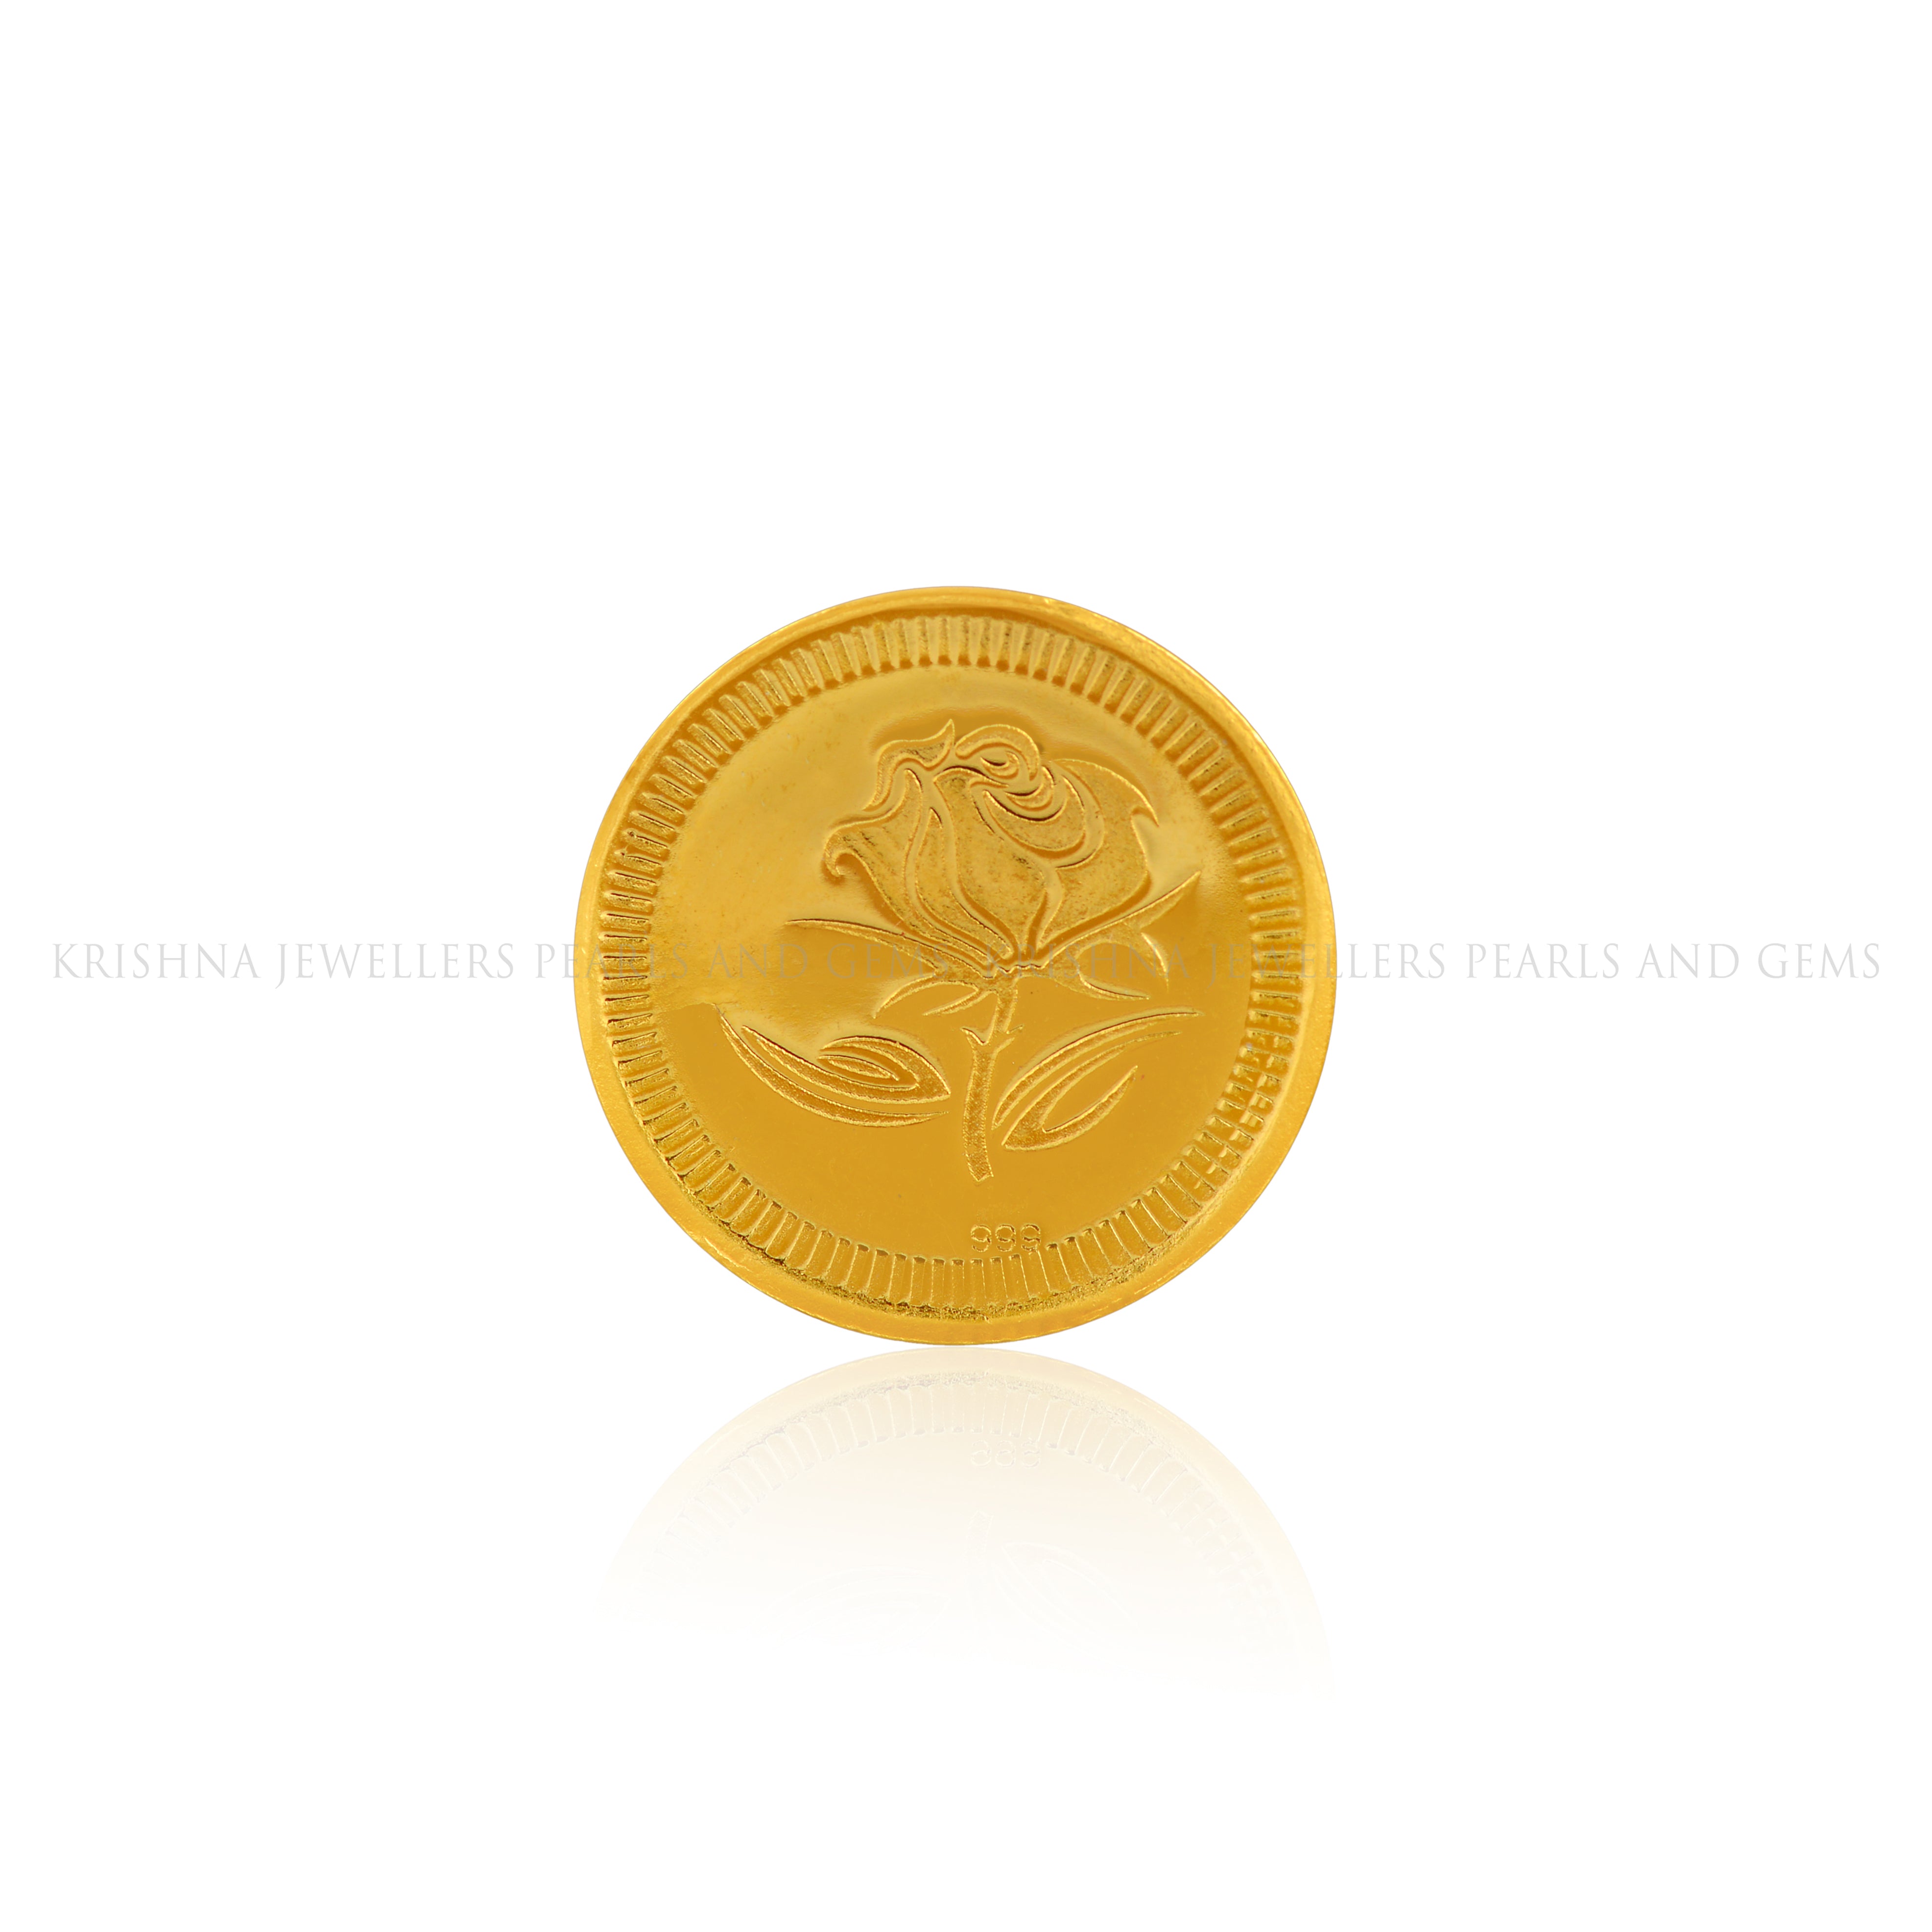 5 Gram Lotus Gold Coin 24k - Krishna Jewellers Pearls and Gems